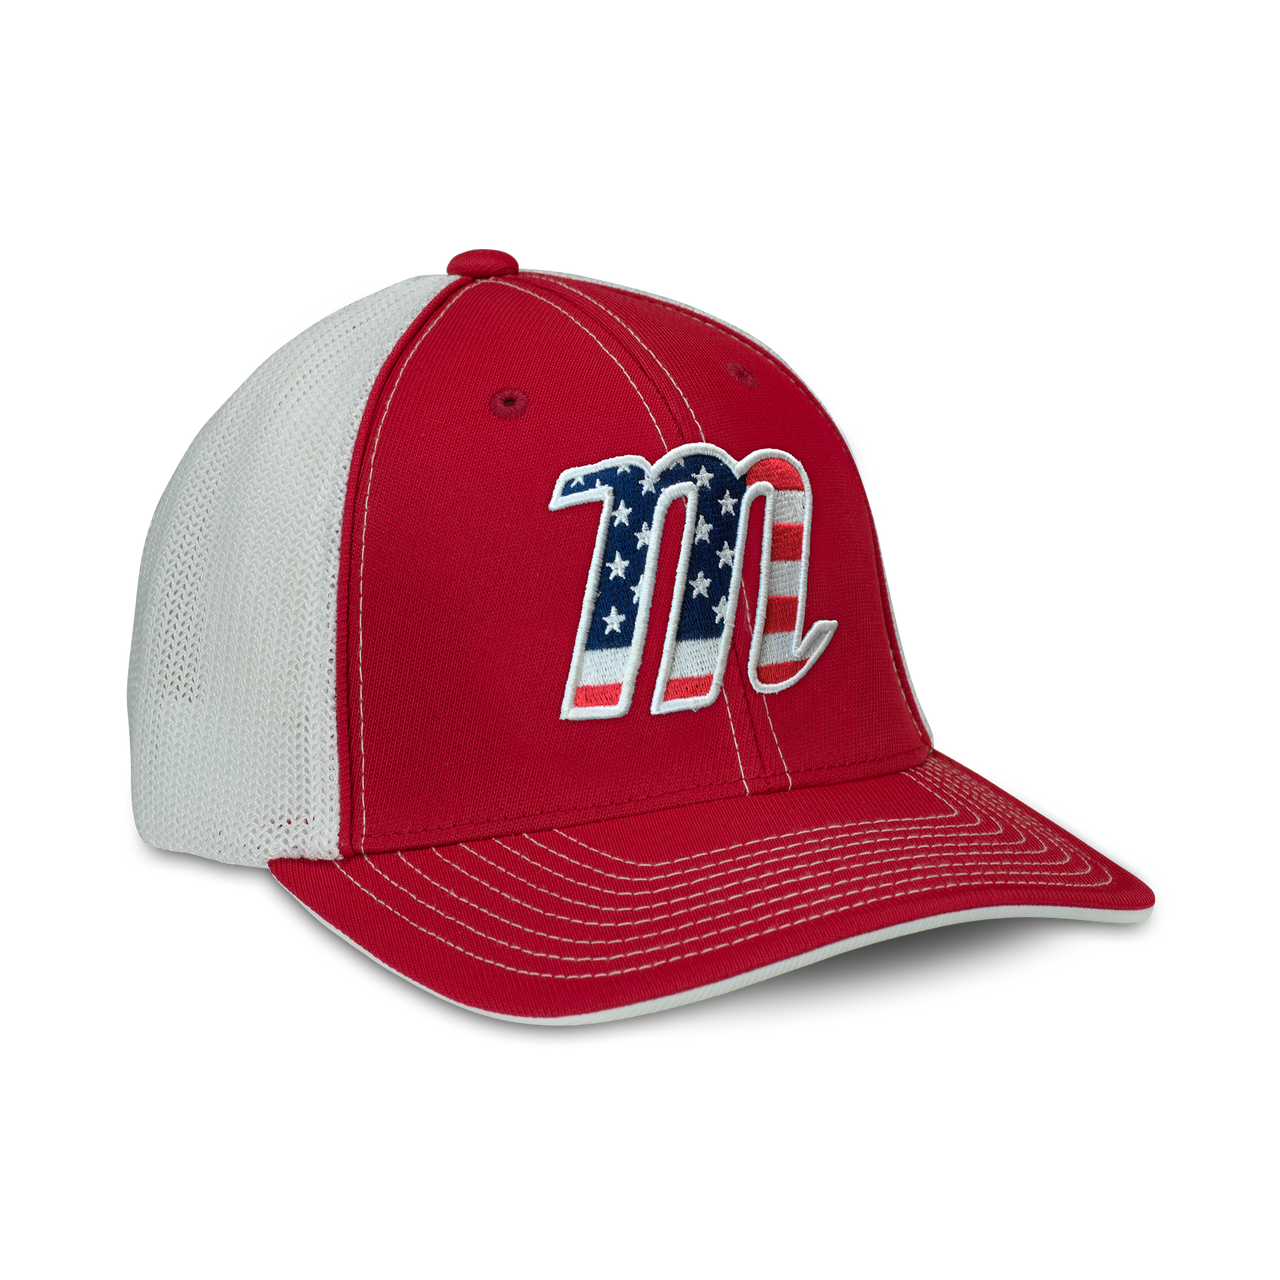 Marucci USA Trucker Snapback Hat Red/White Adjustable